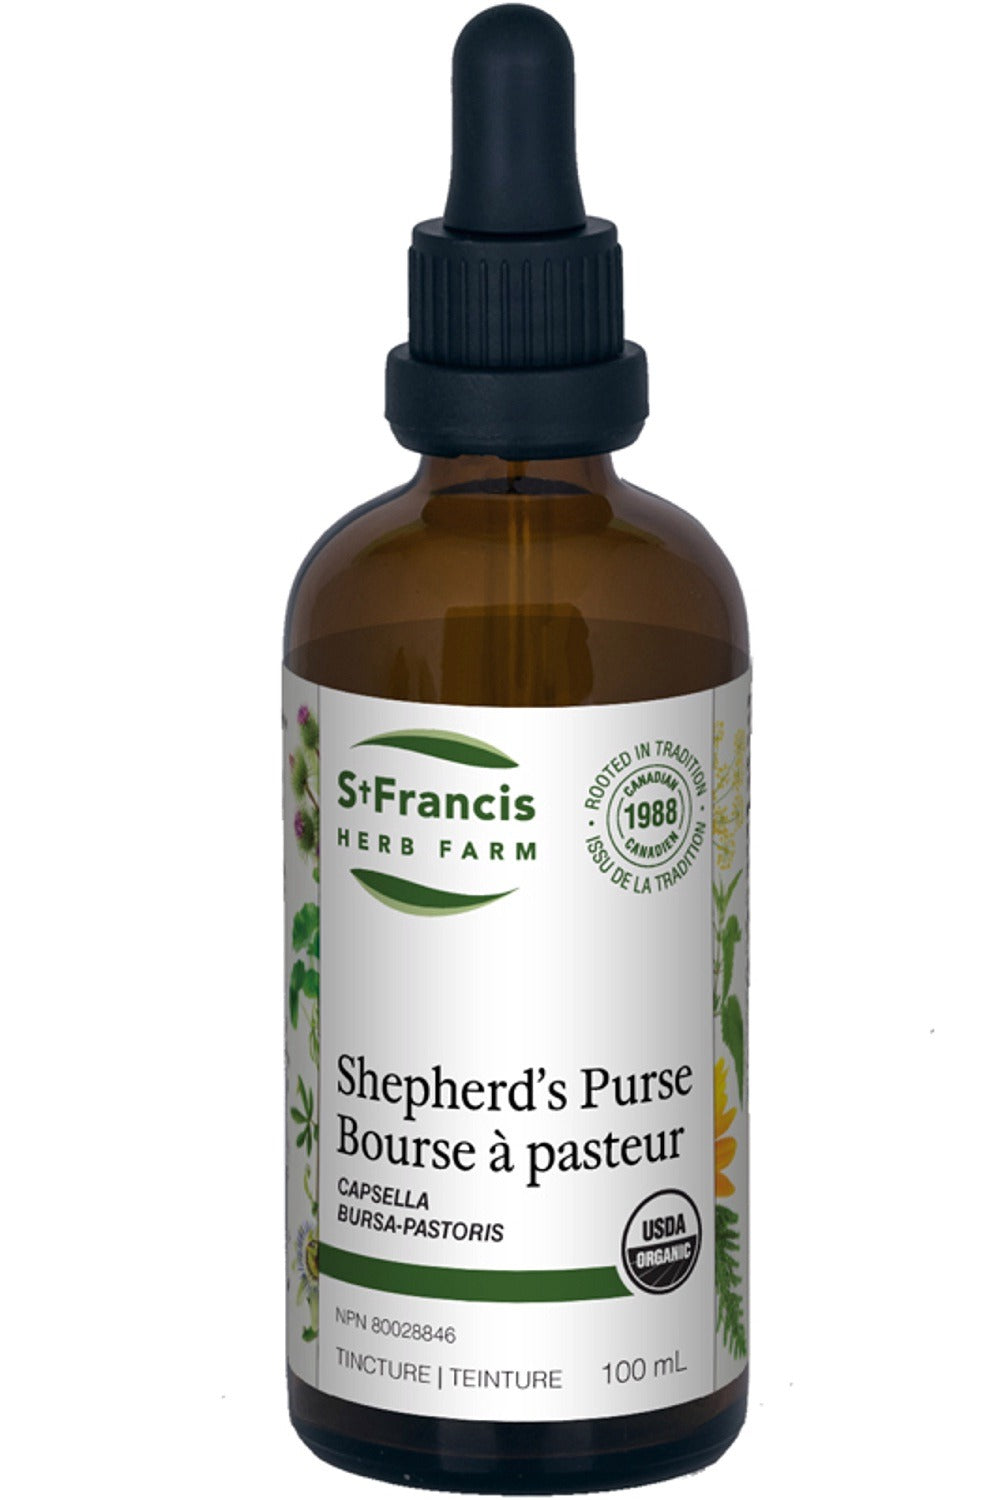 ST FRANCIS HERB FARM Shepherd's Purse (100 ml)